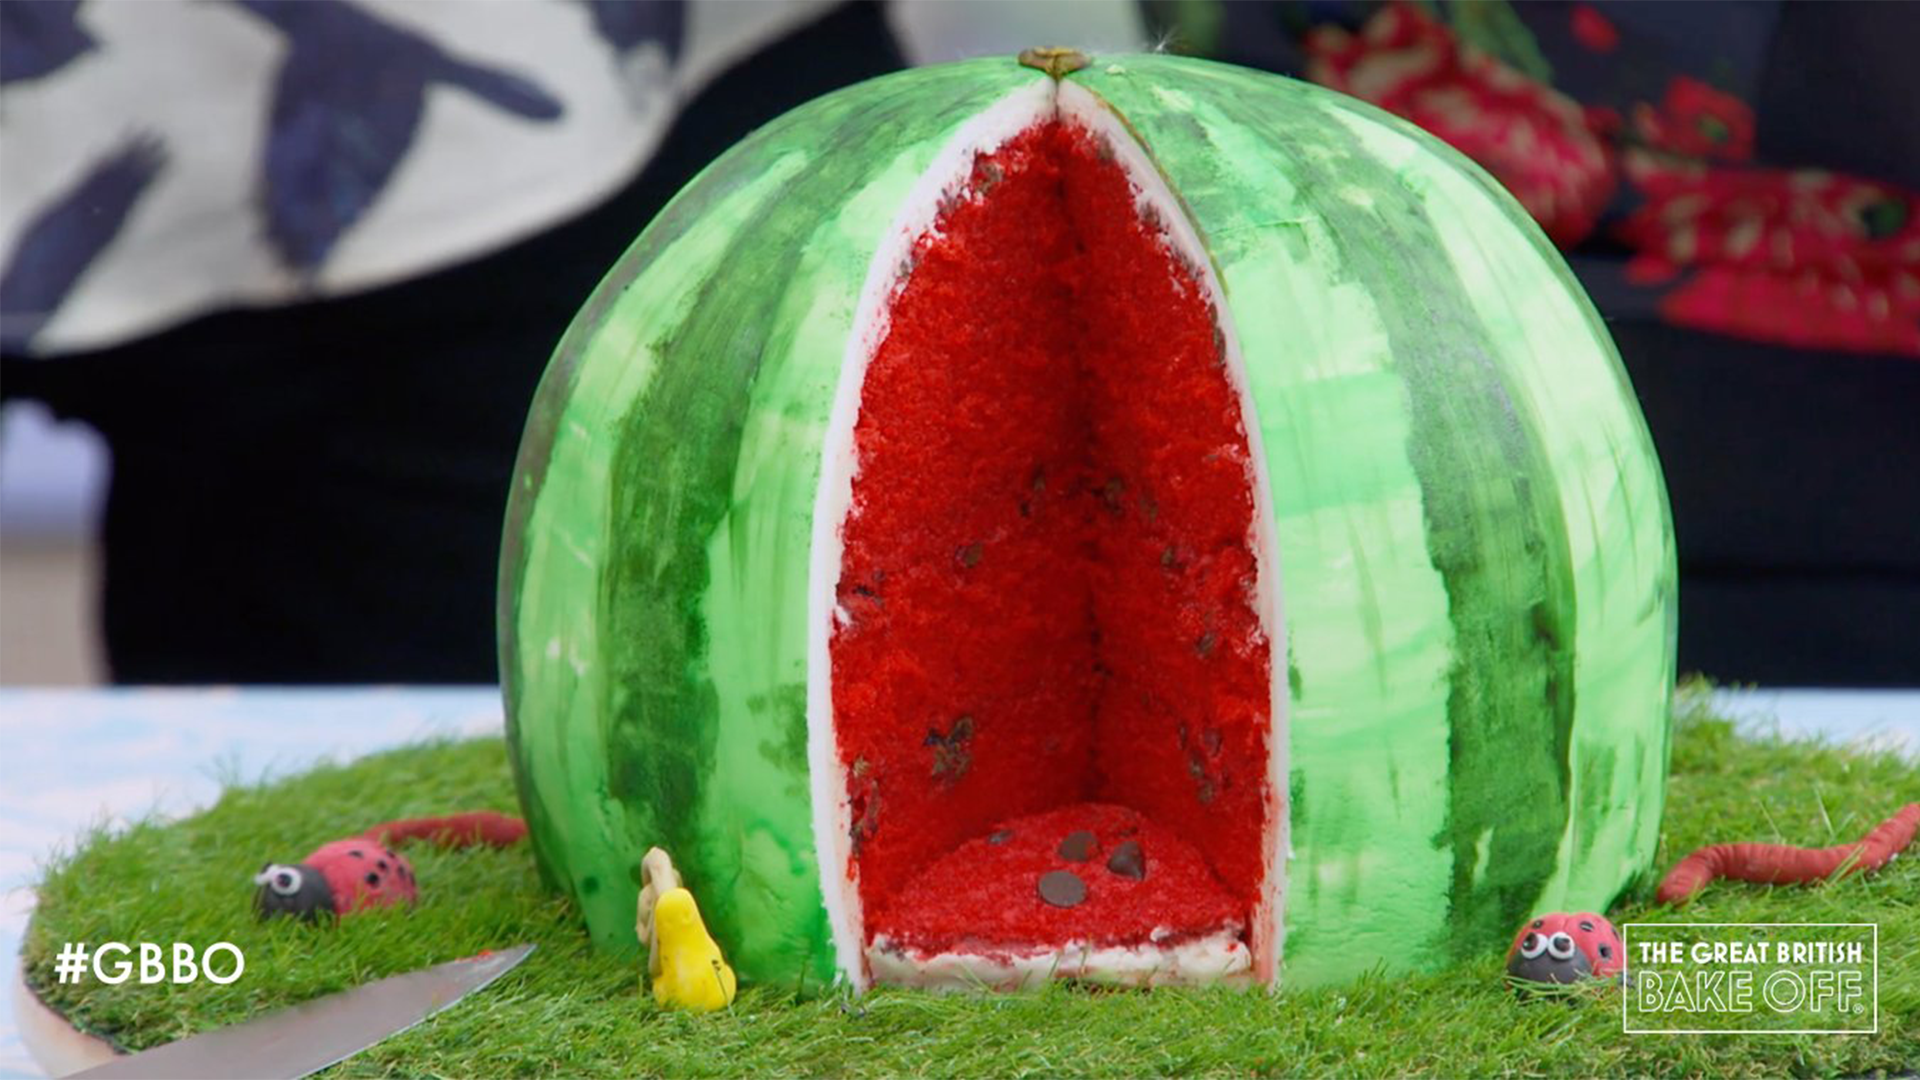 A watermelon style cake